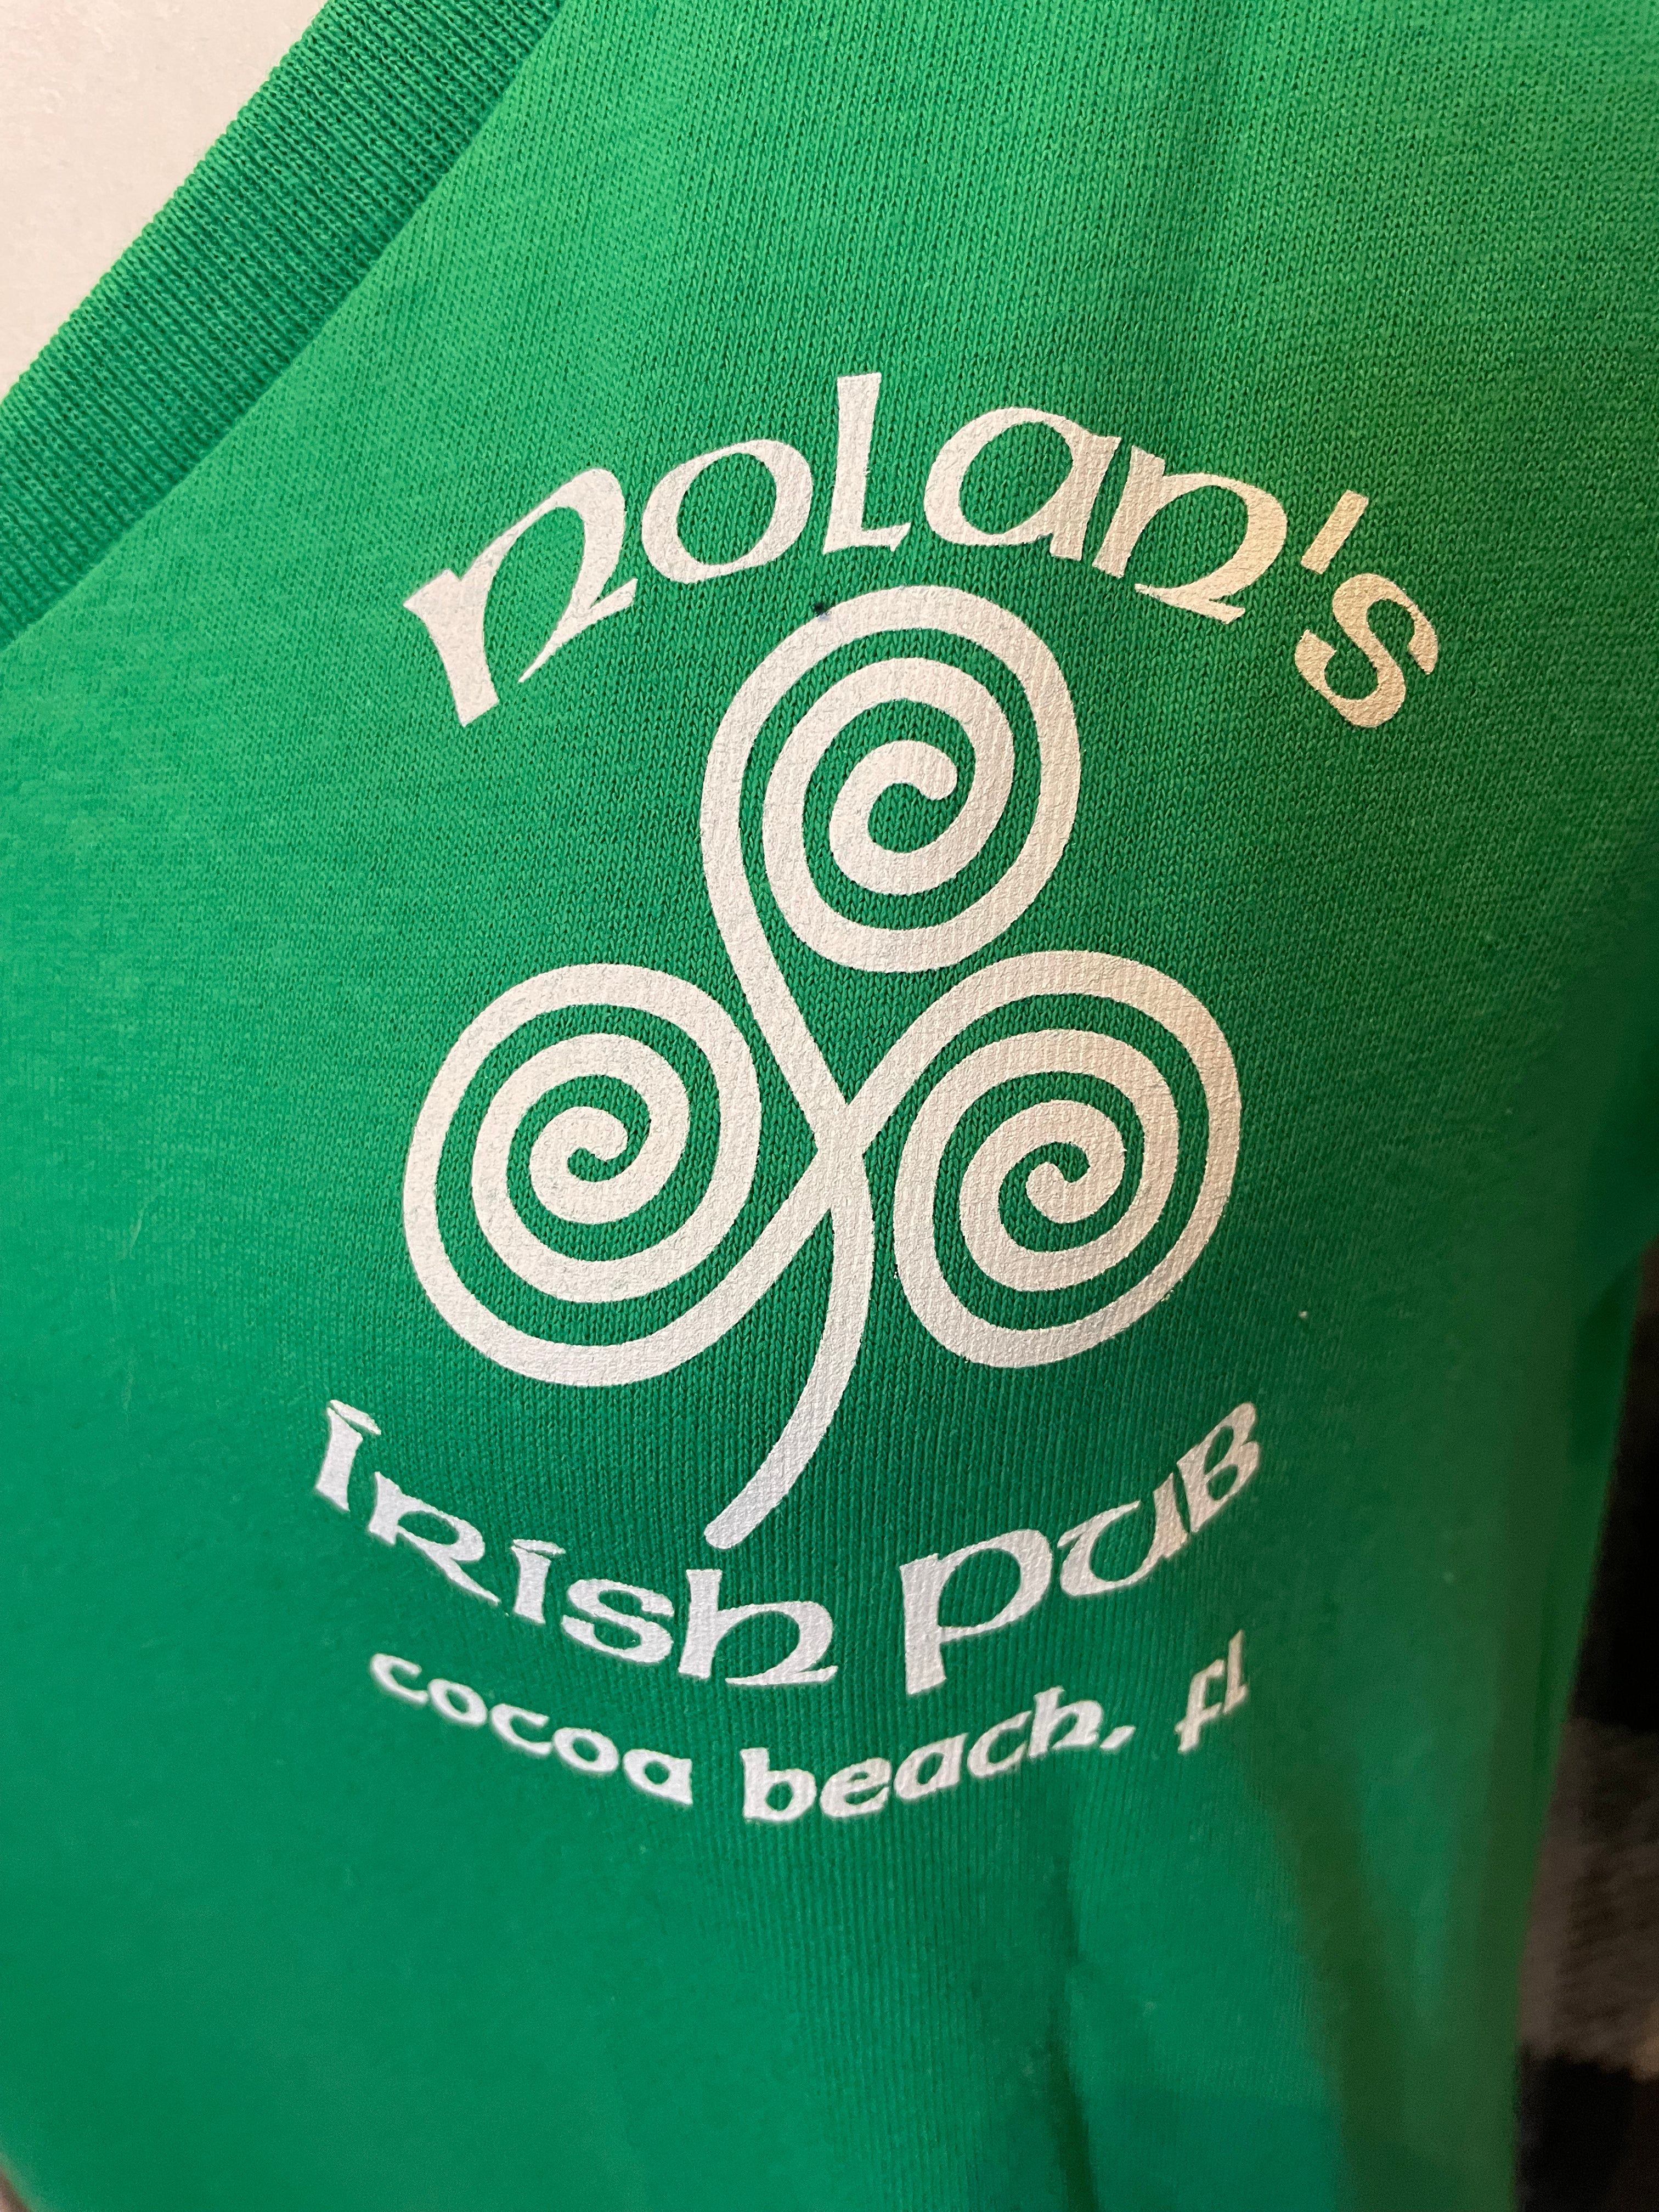 Nolan's Ladies Beach Blast - Green